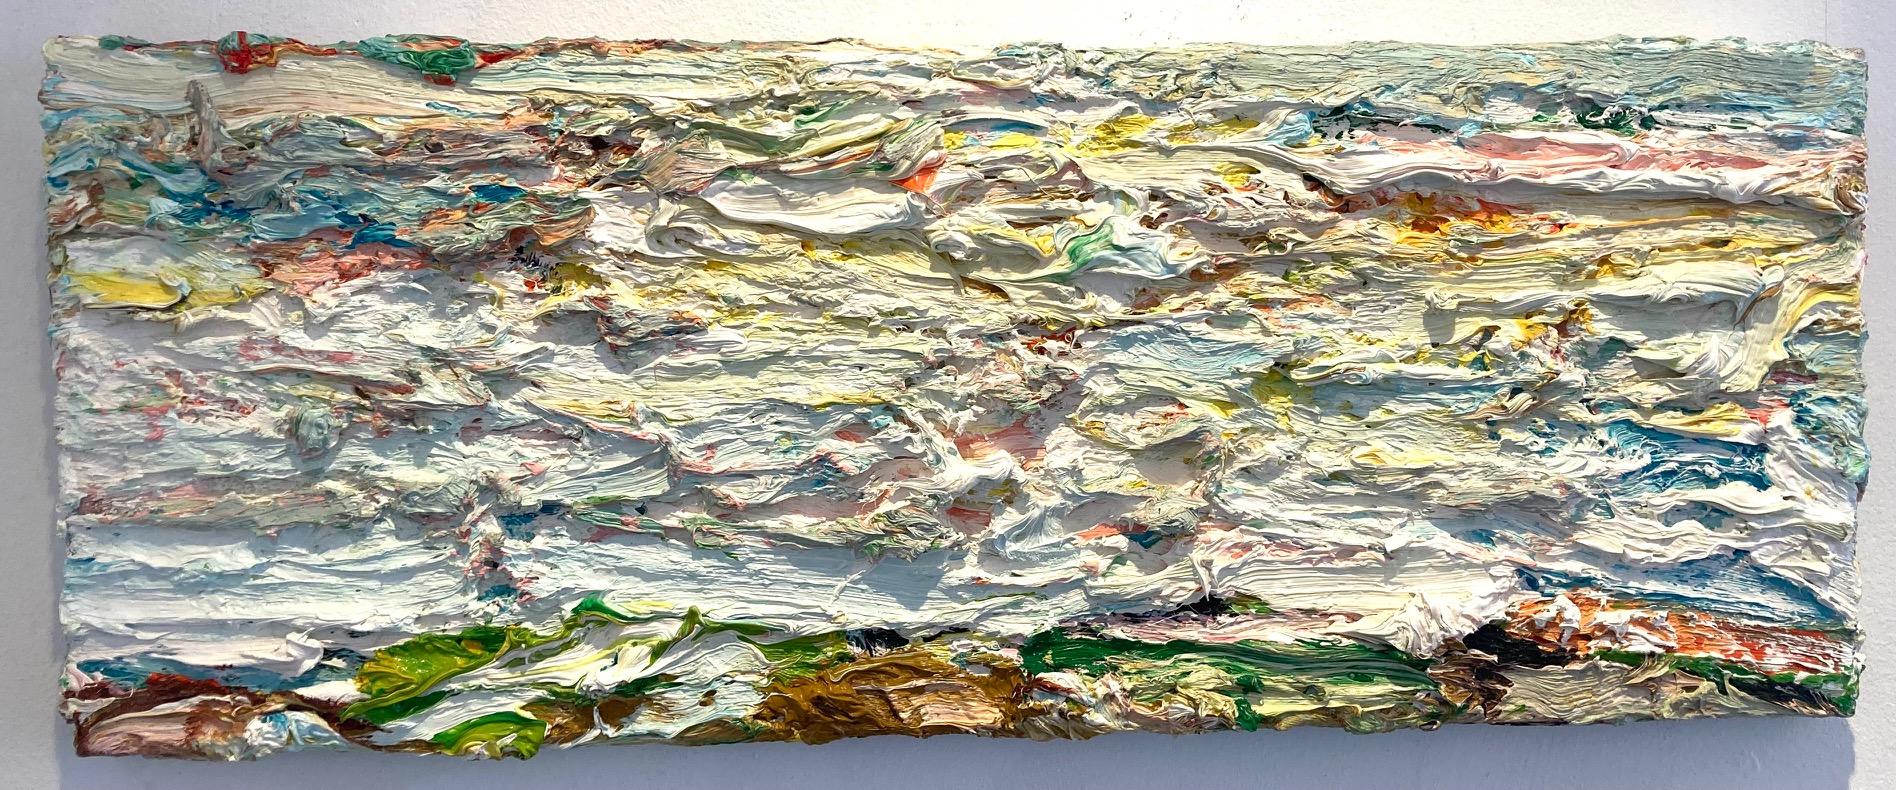 Marie José Robben Landscape Painting - Longitudinaal Oil on Canvas Abstract Horizon Landscape In Stock